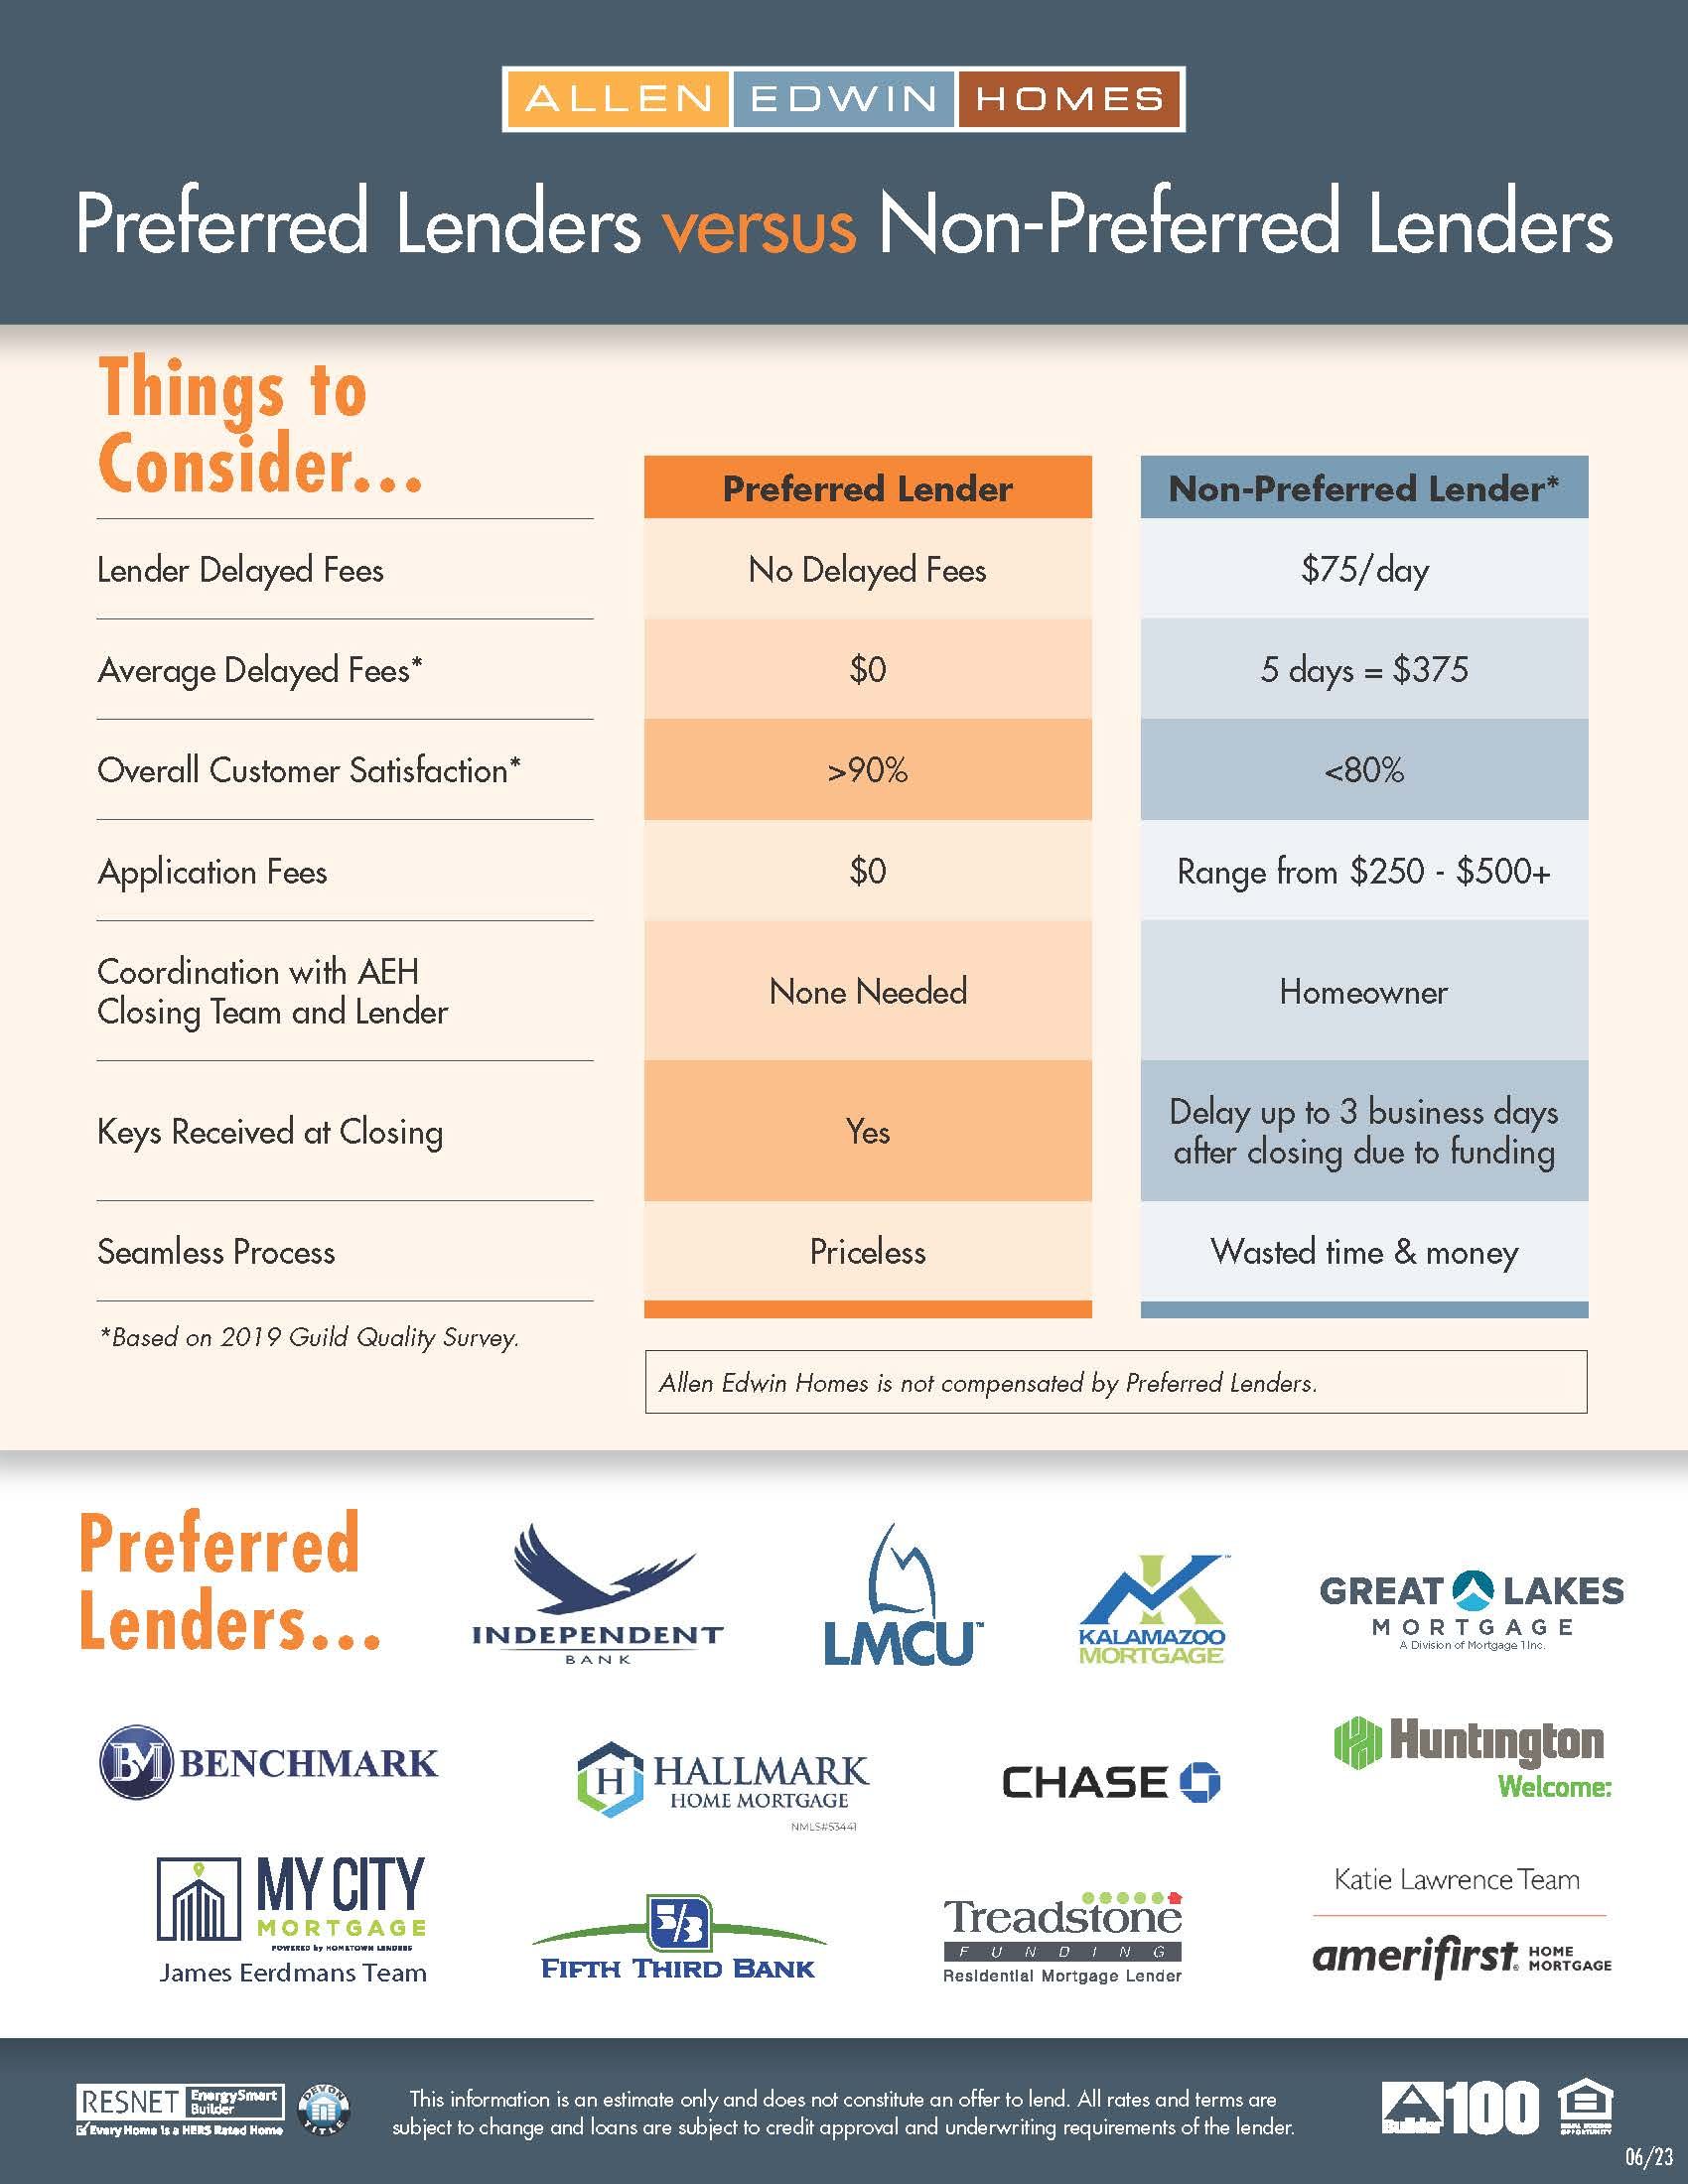 Preferred lenders vs non-preferred lenders infographic